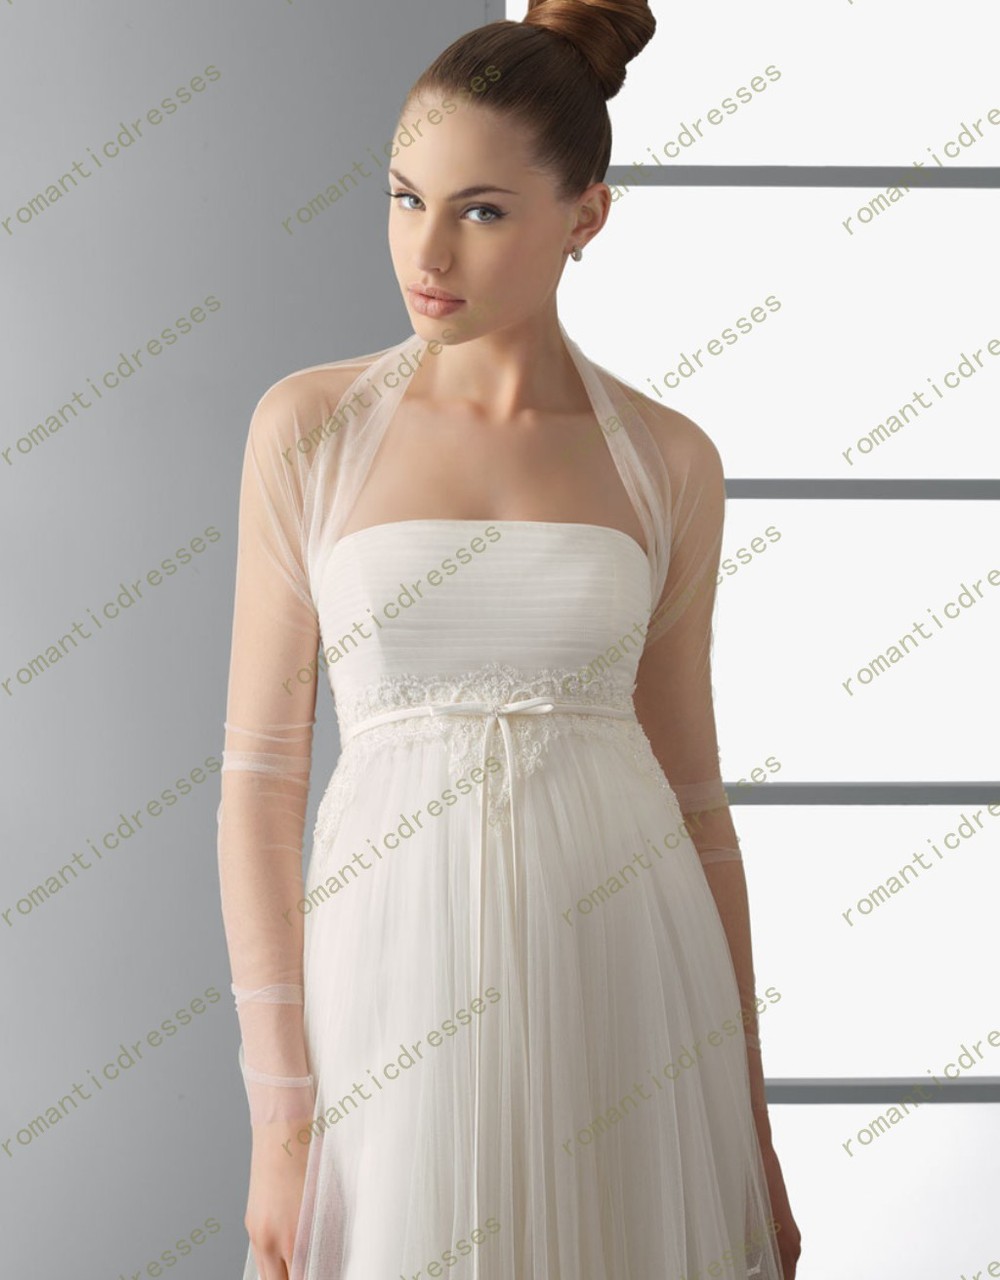 Custom made Tulle Long See Through Half Sleeve Wedding Jackets 2013New Free Shipping wedding accessory